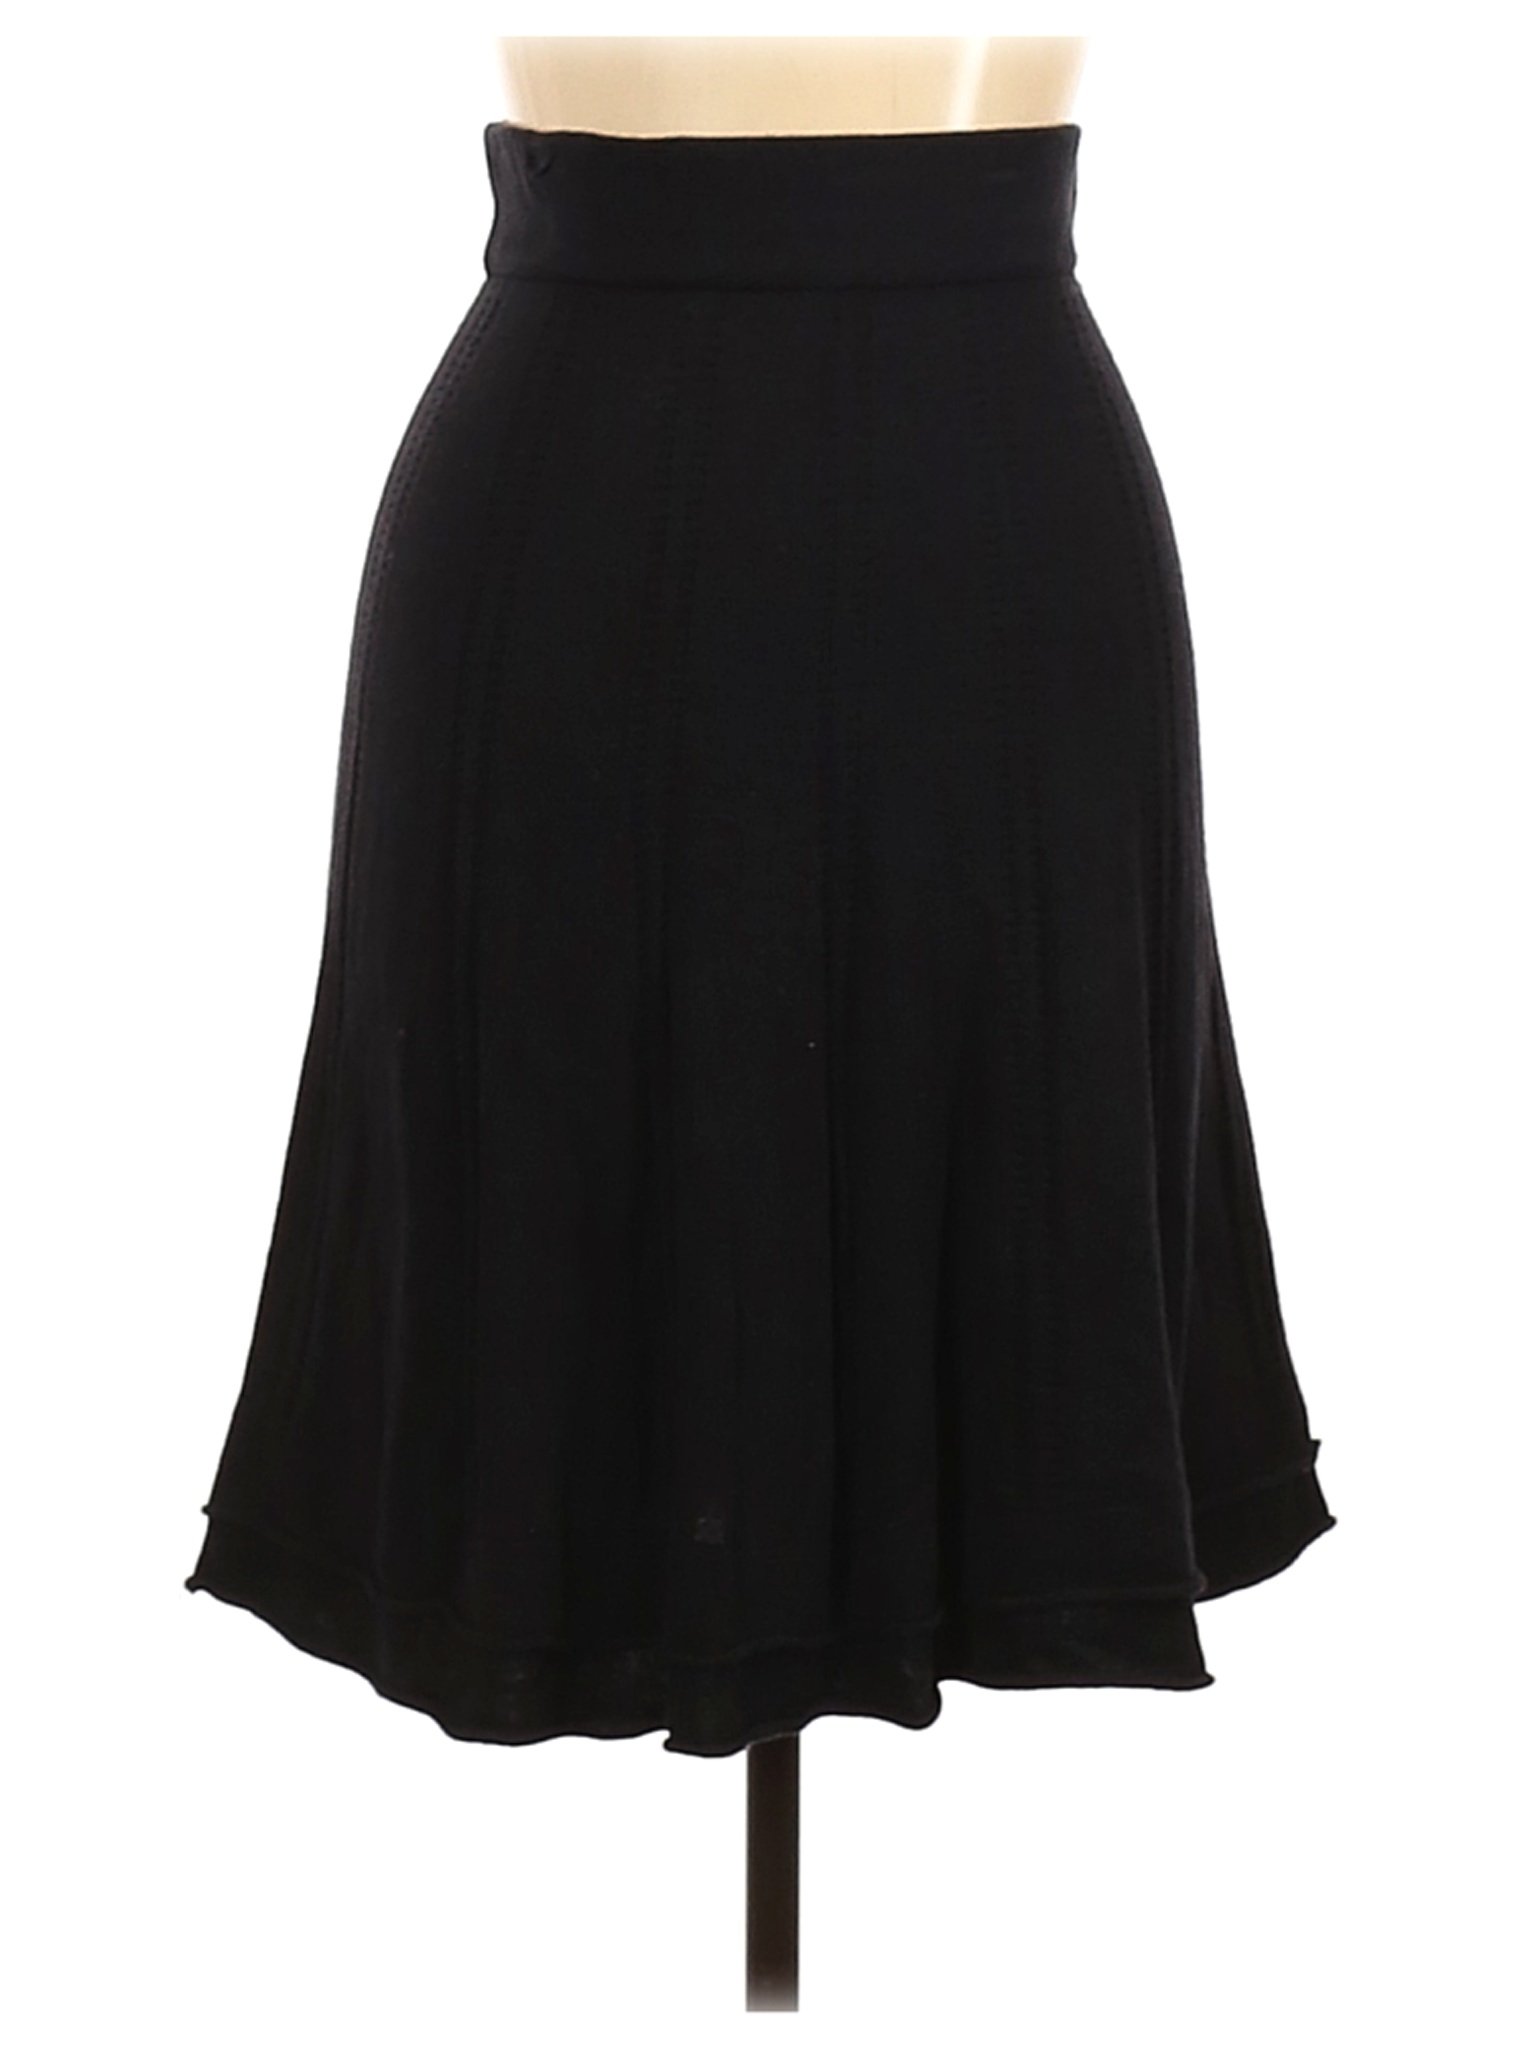 Assorted Brands Women Black Casual Skirt L | eBay